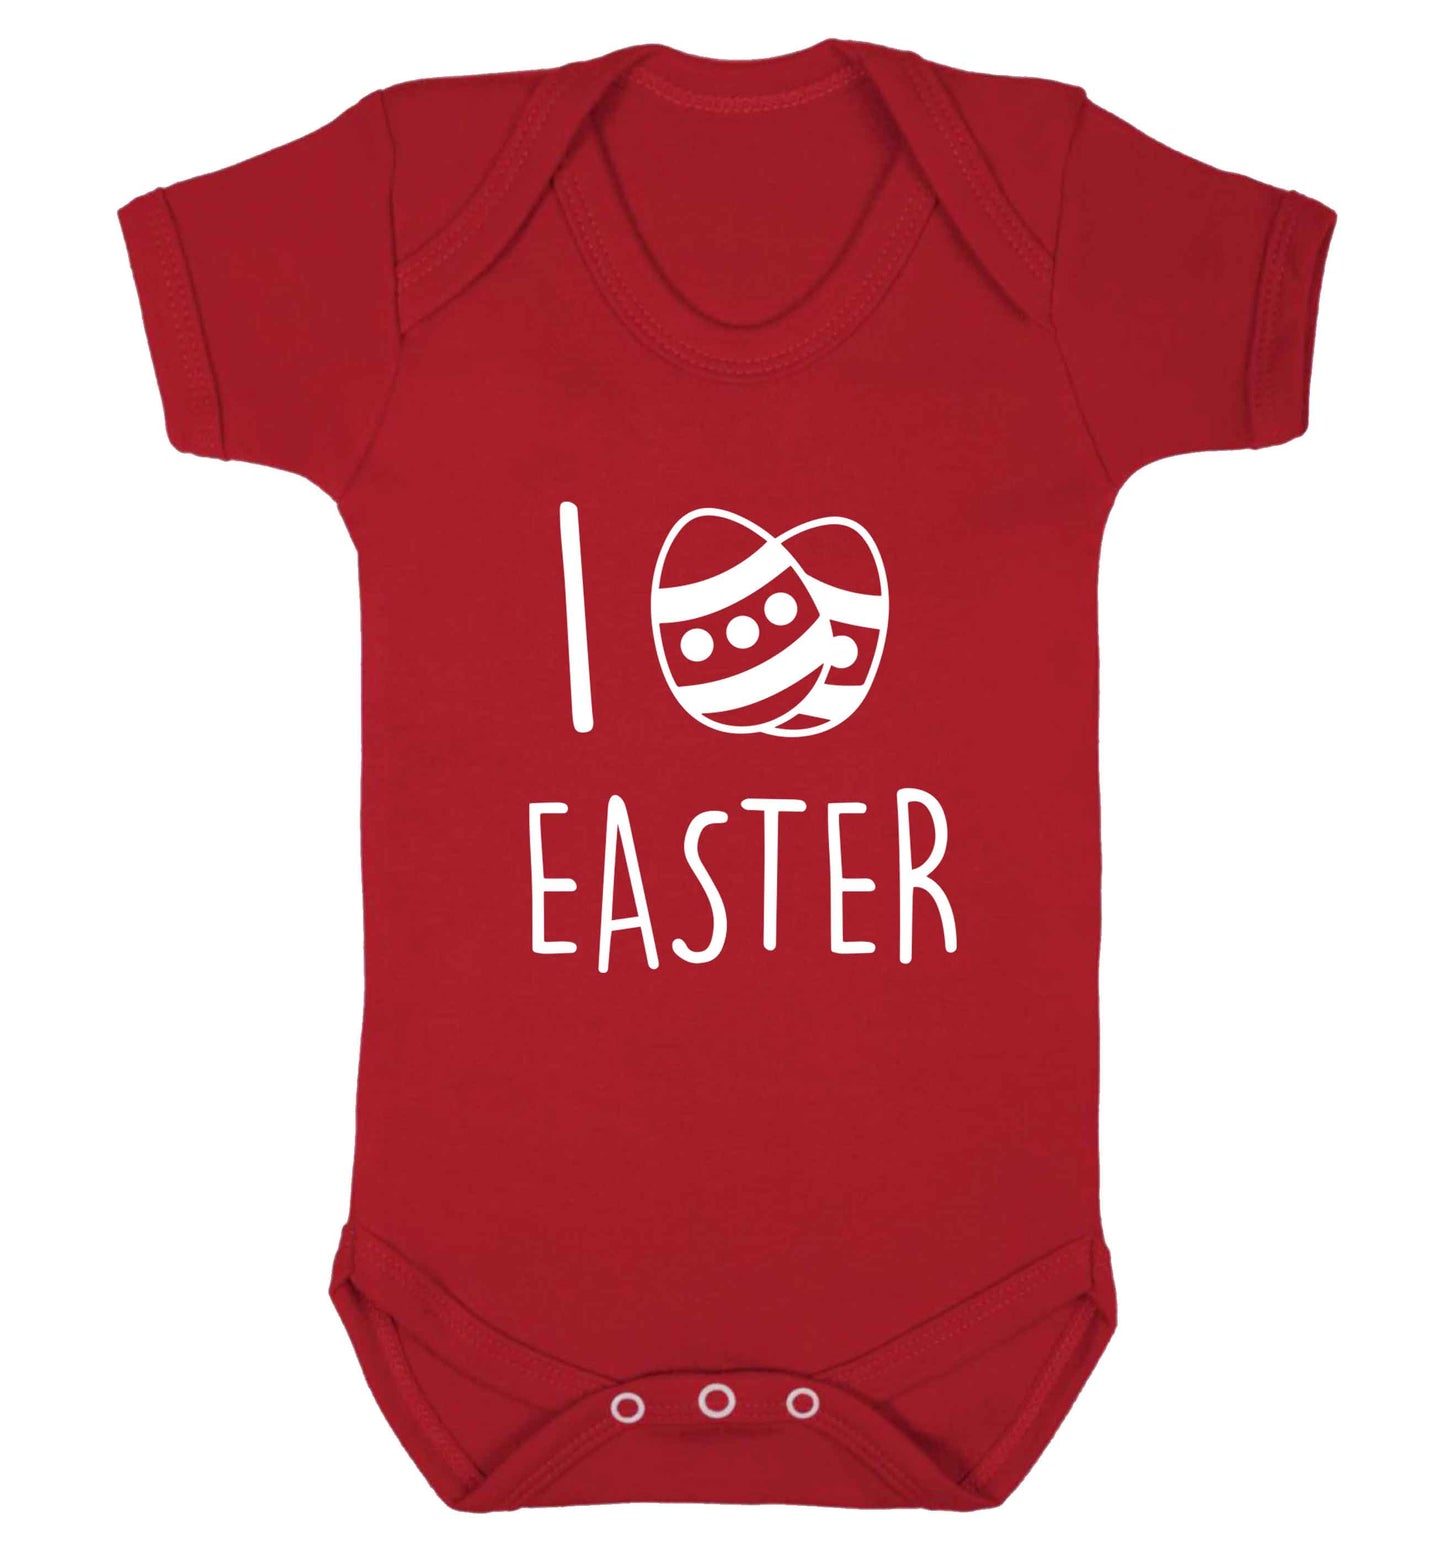 I love Easter baby vest red 18-24 months